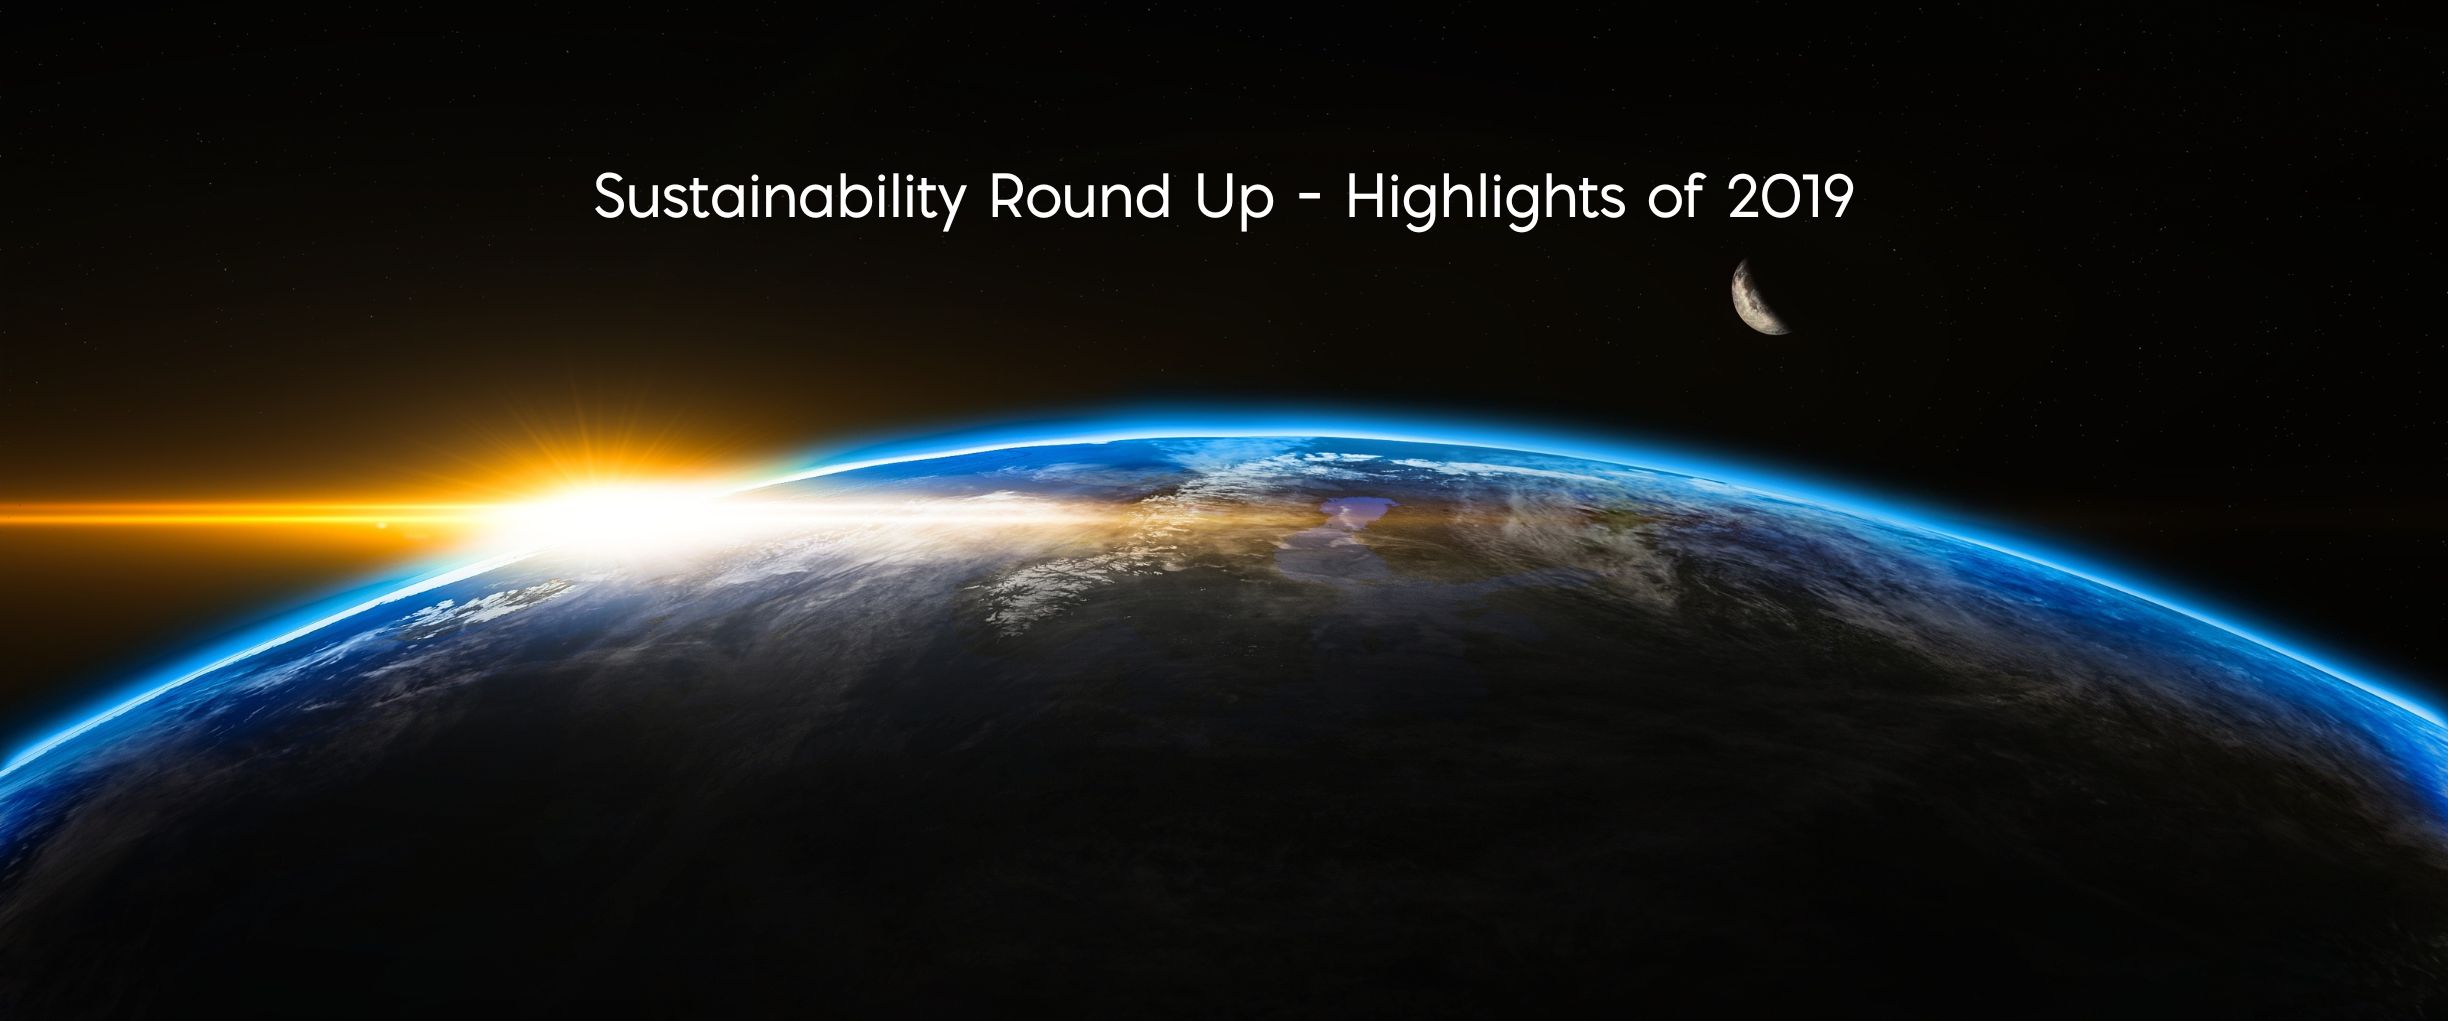 Sustainability Round Up 2019 Highlights